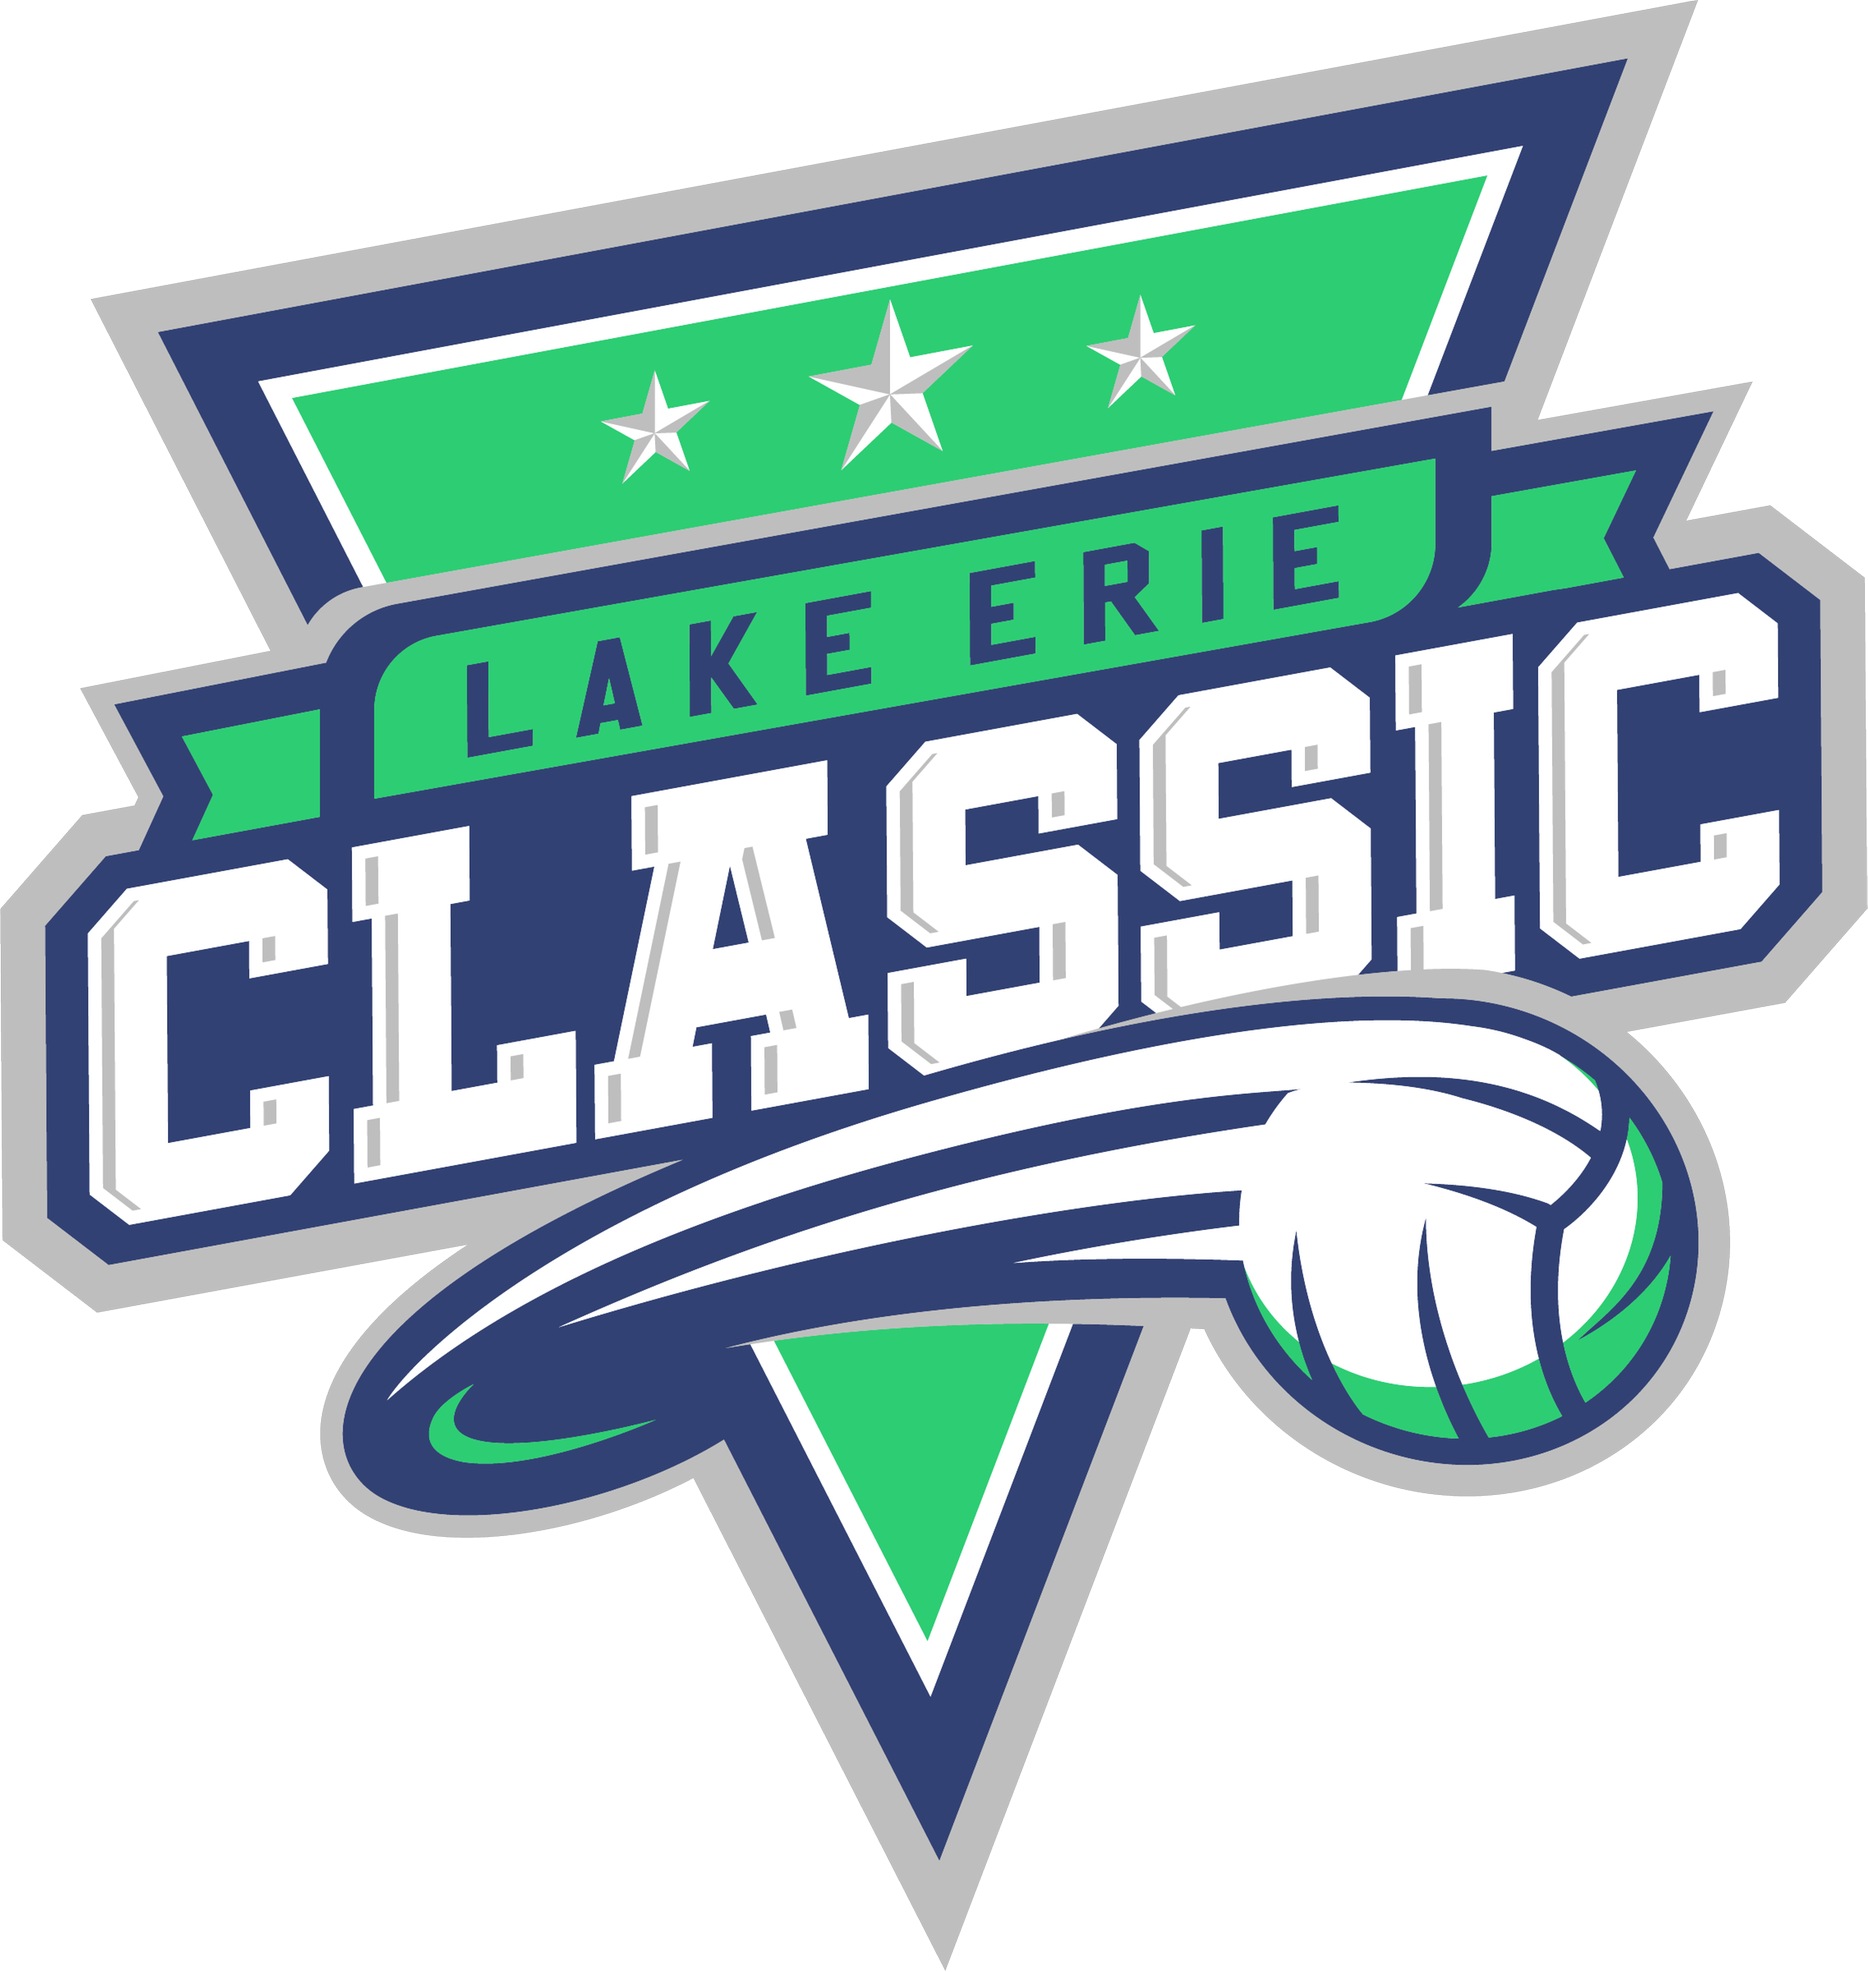 Lake Erie Classic logo